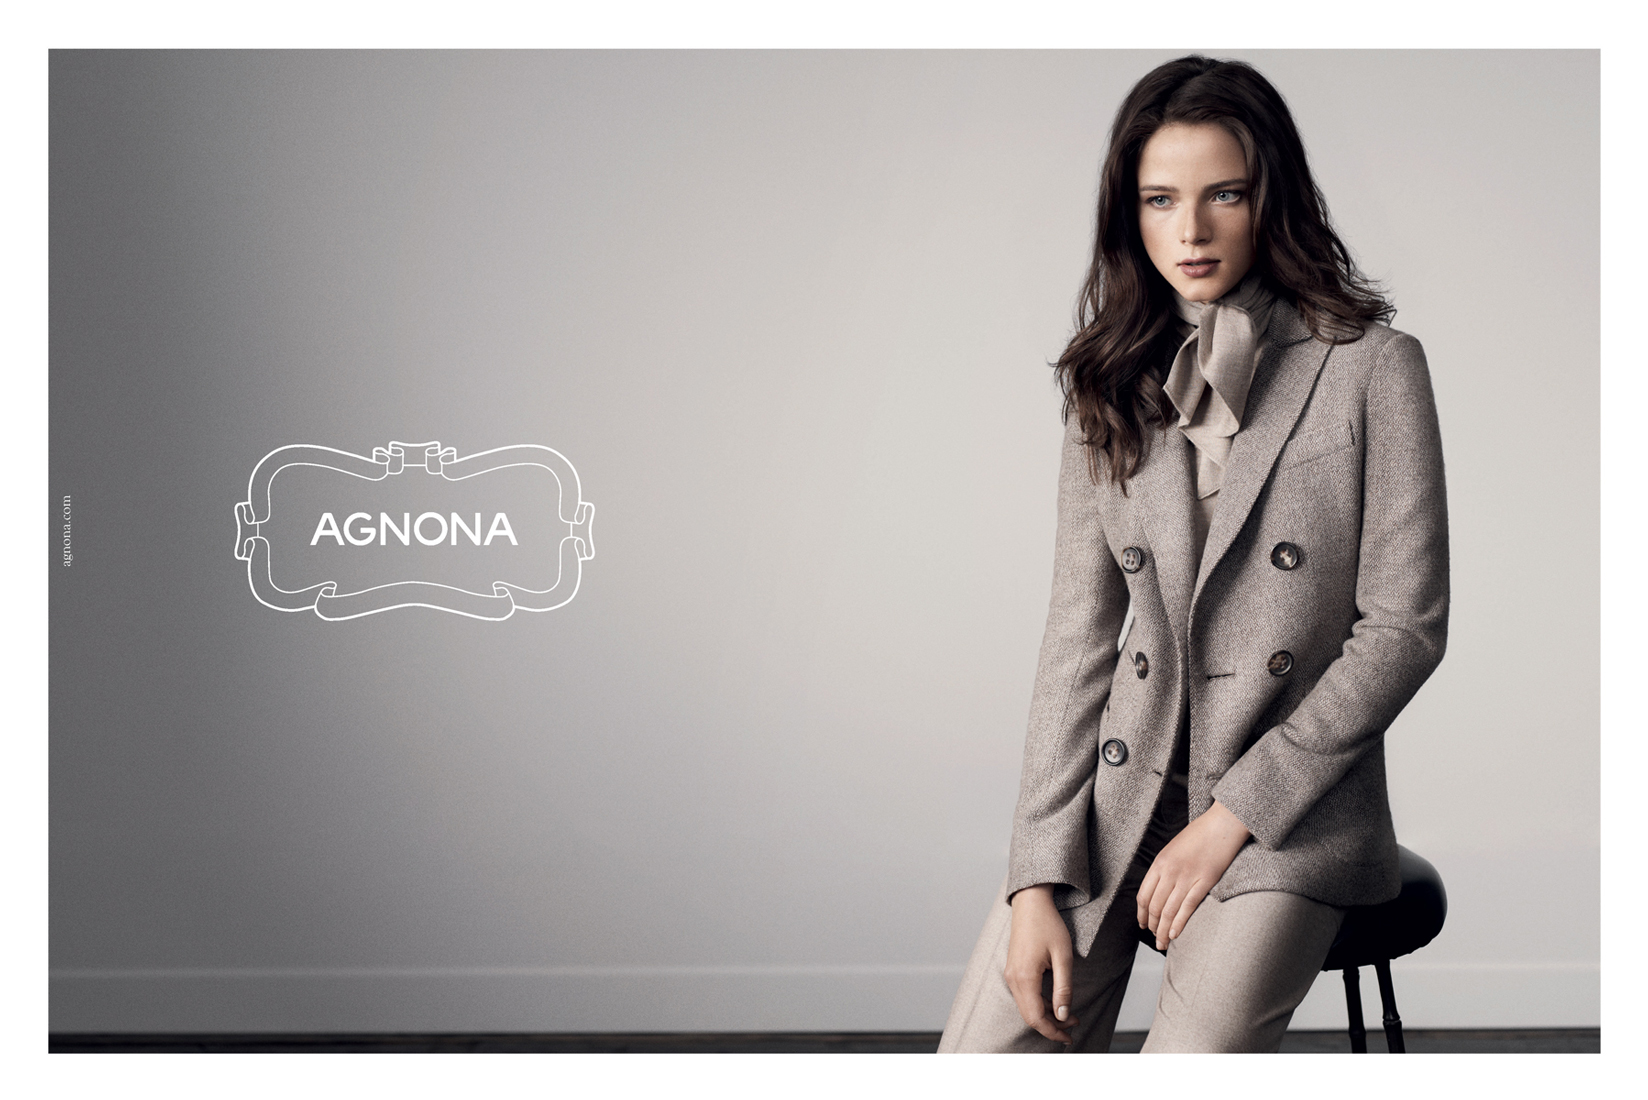 Rule collection. Agnona о бренде. Имидж бренда. Образ бренда. Agnona woman brand.